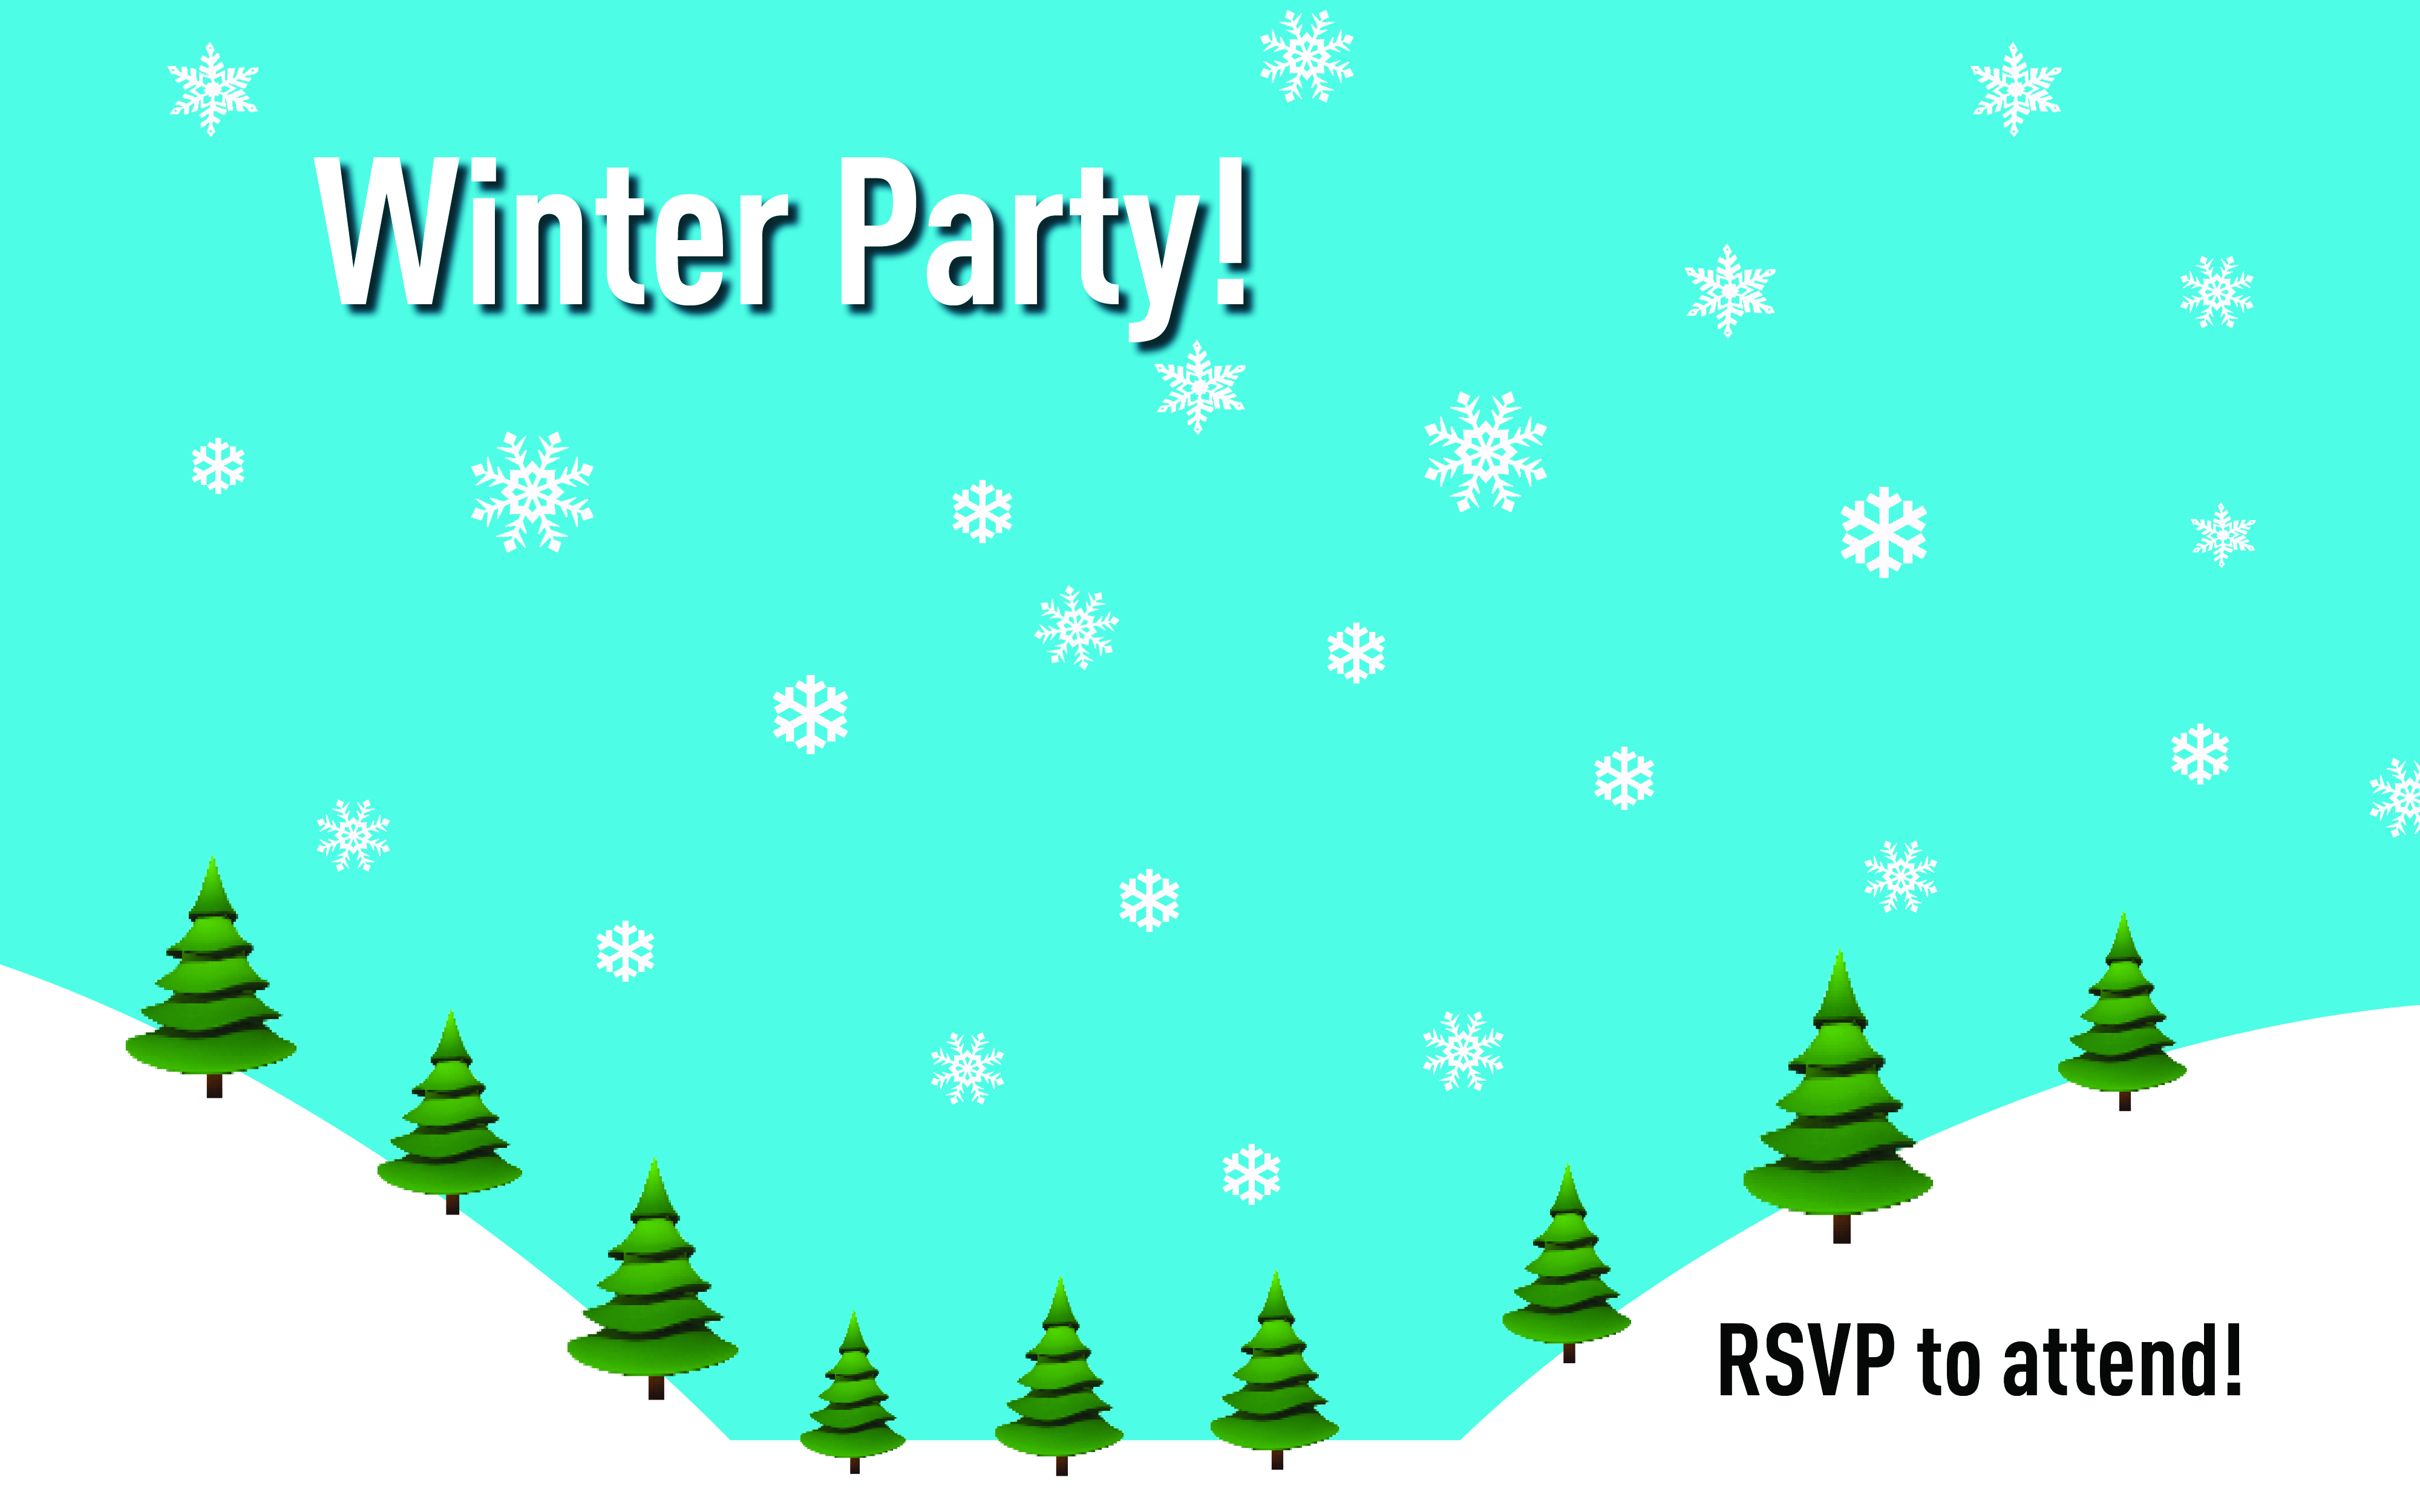 University of Alberta International's annual winter party